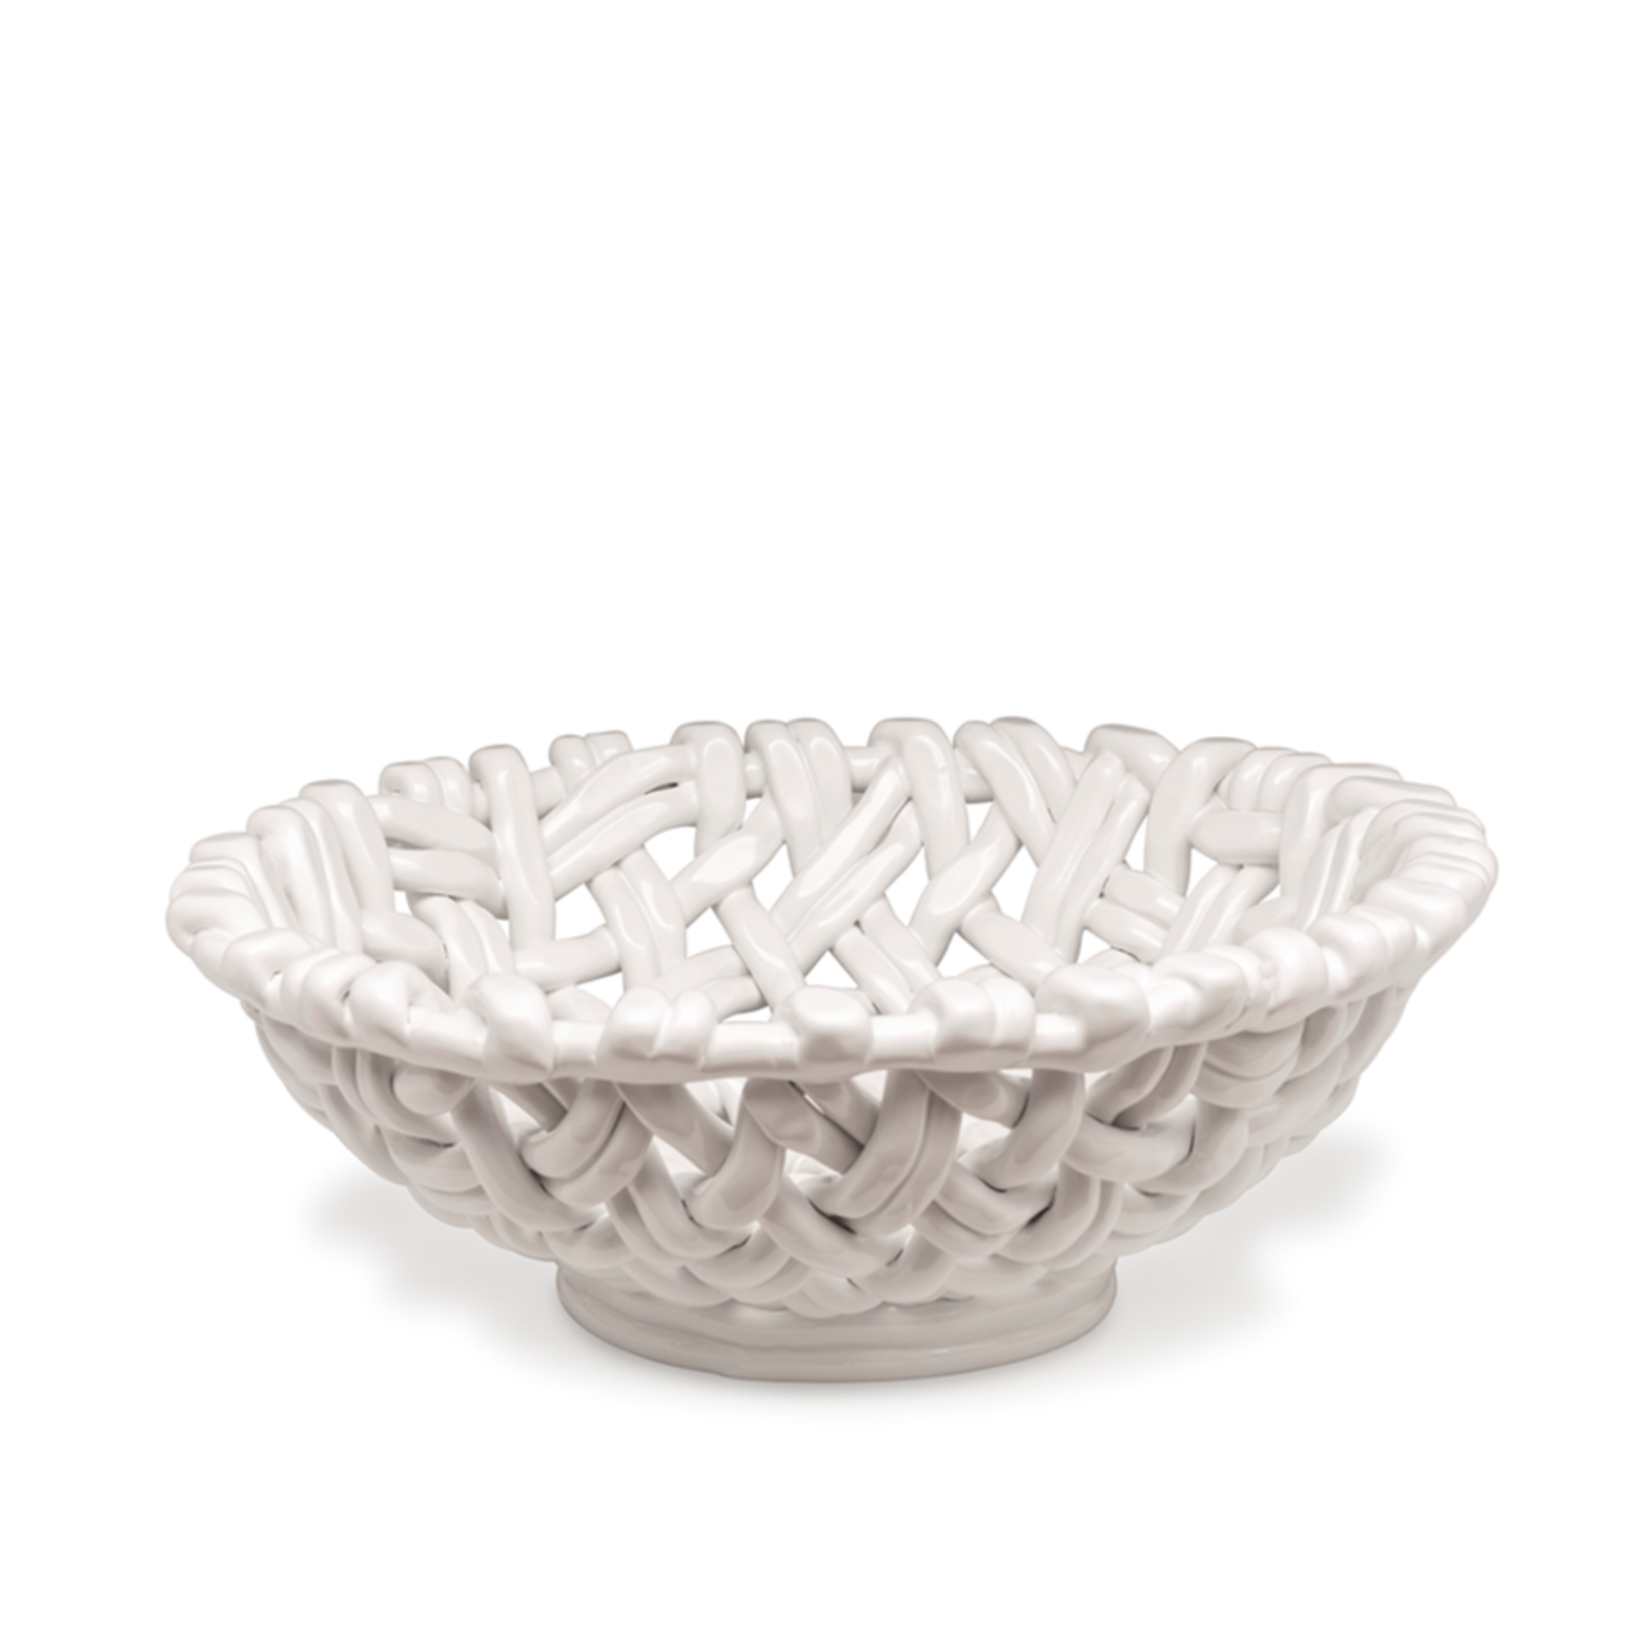 Skyros Designs Hand Woven Round Basket - White